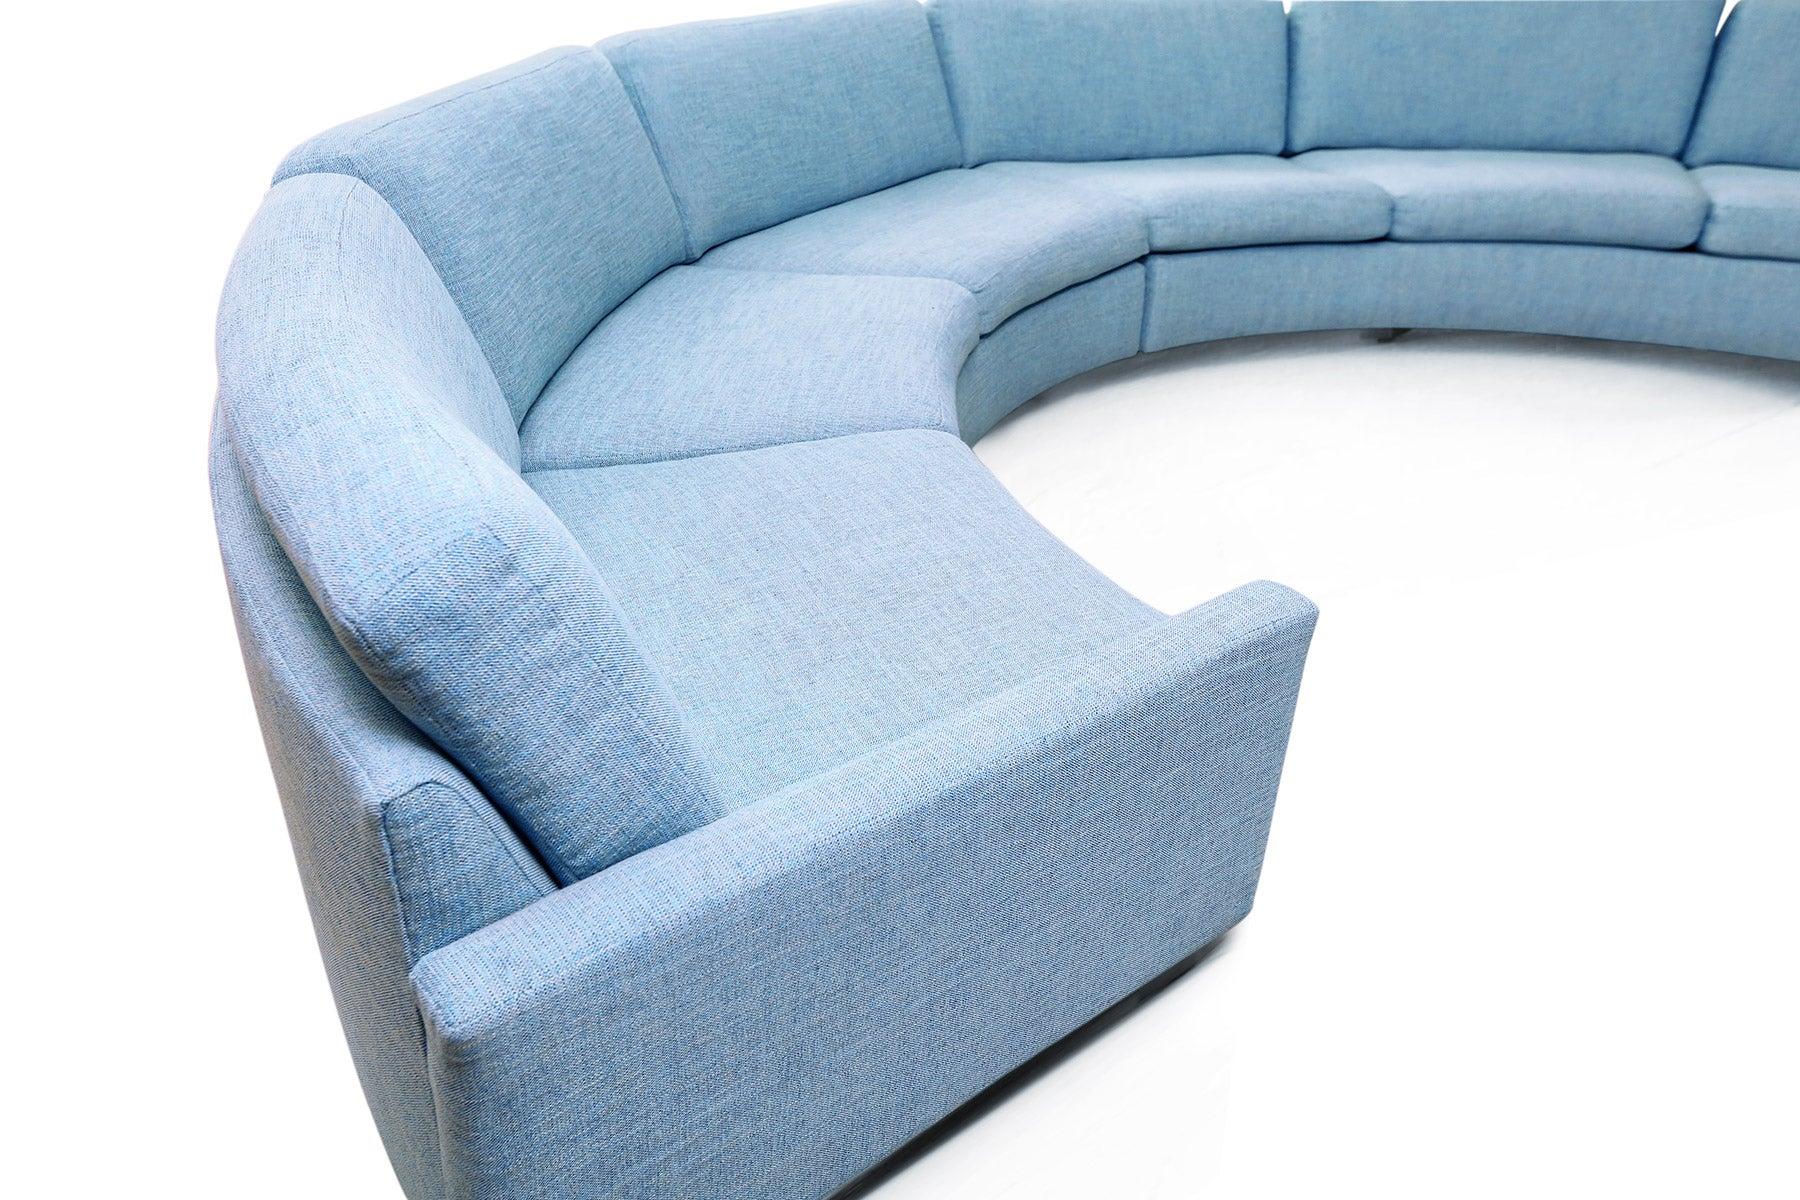 Upholstery Milo Baughman Turquoise Aqua Semi Circular Sectional Sofa for Thayer Coggin